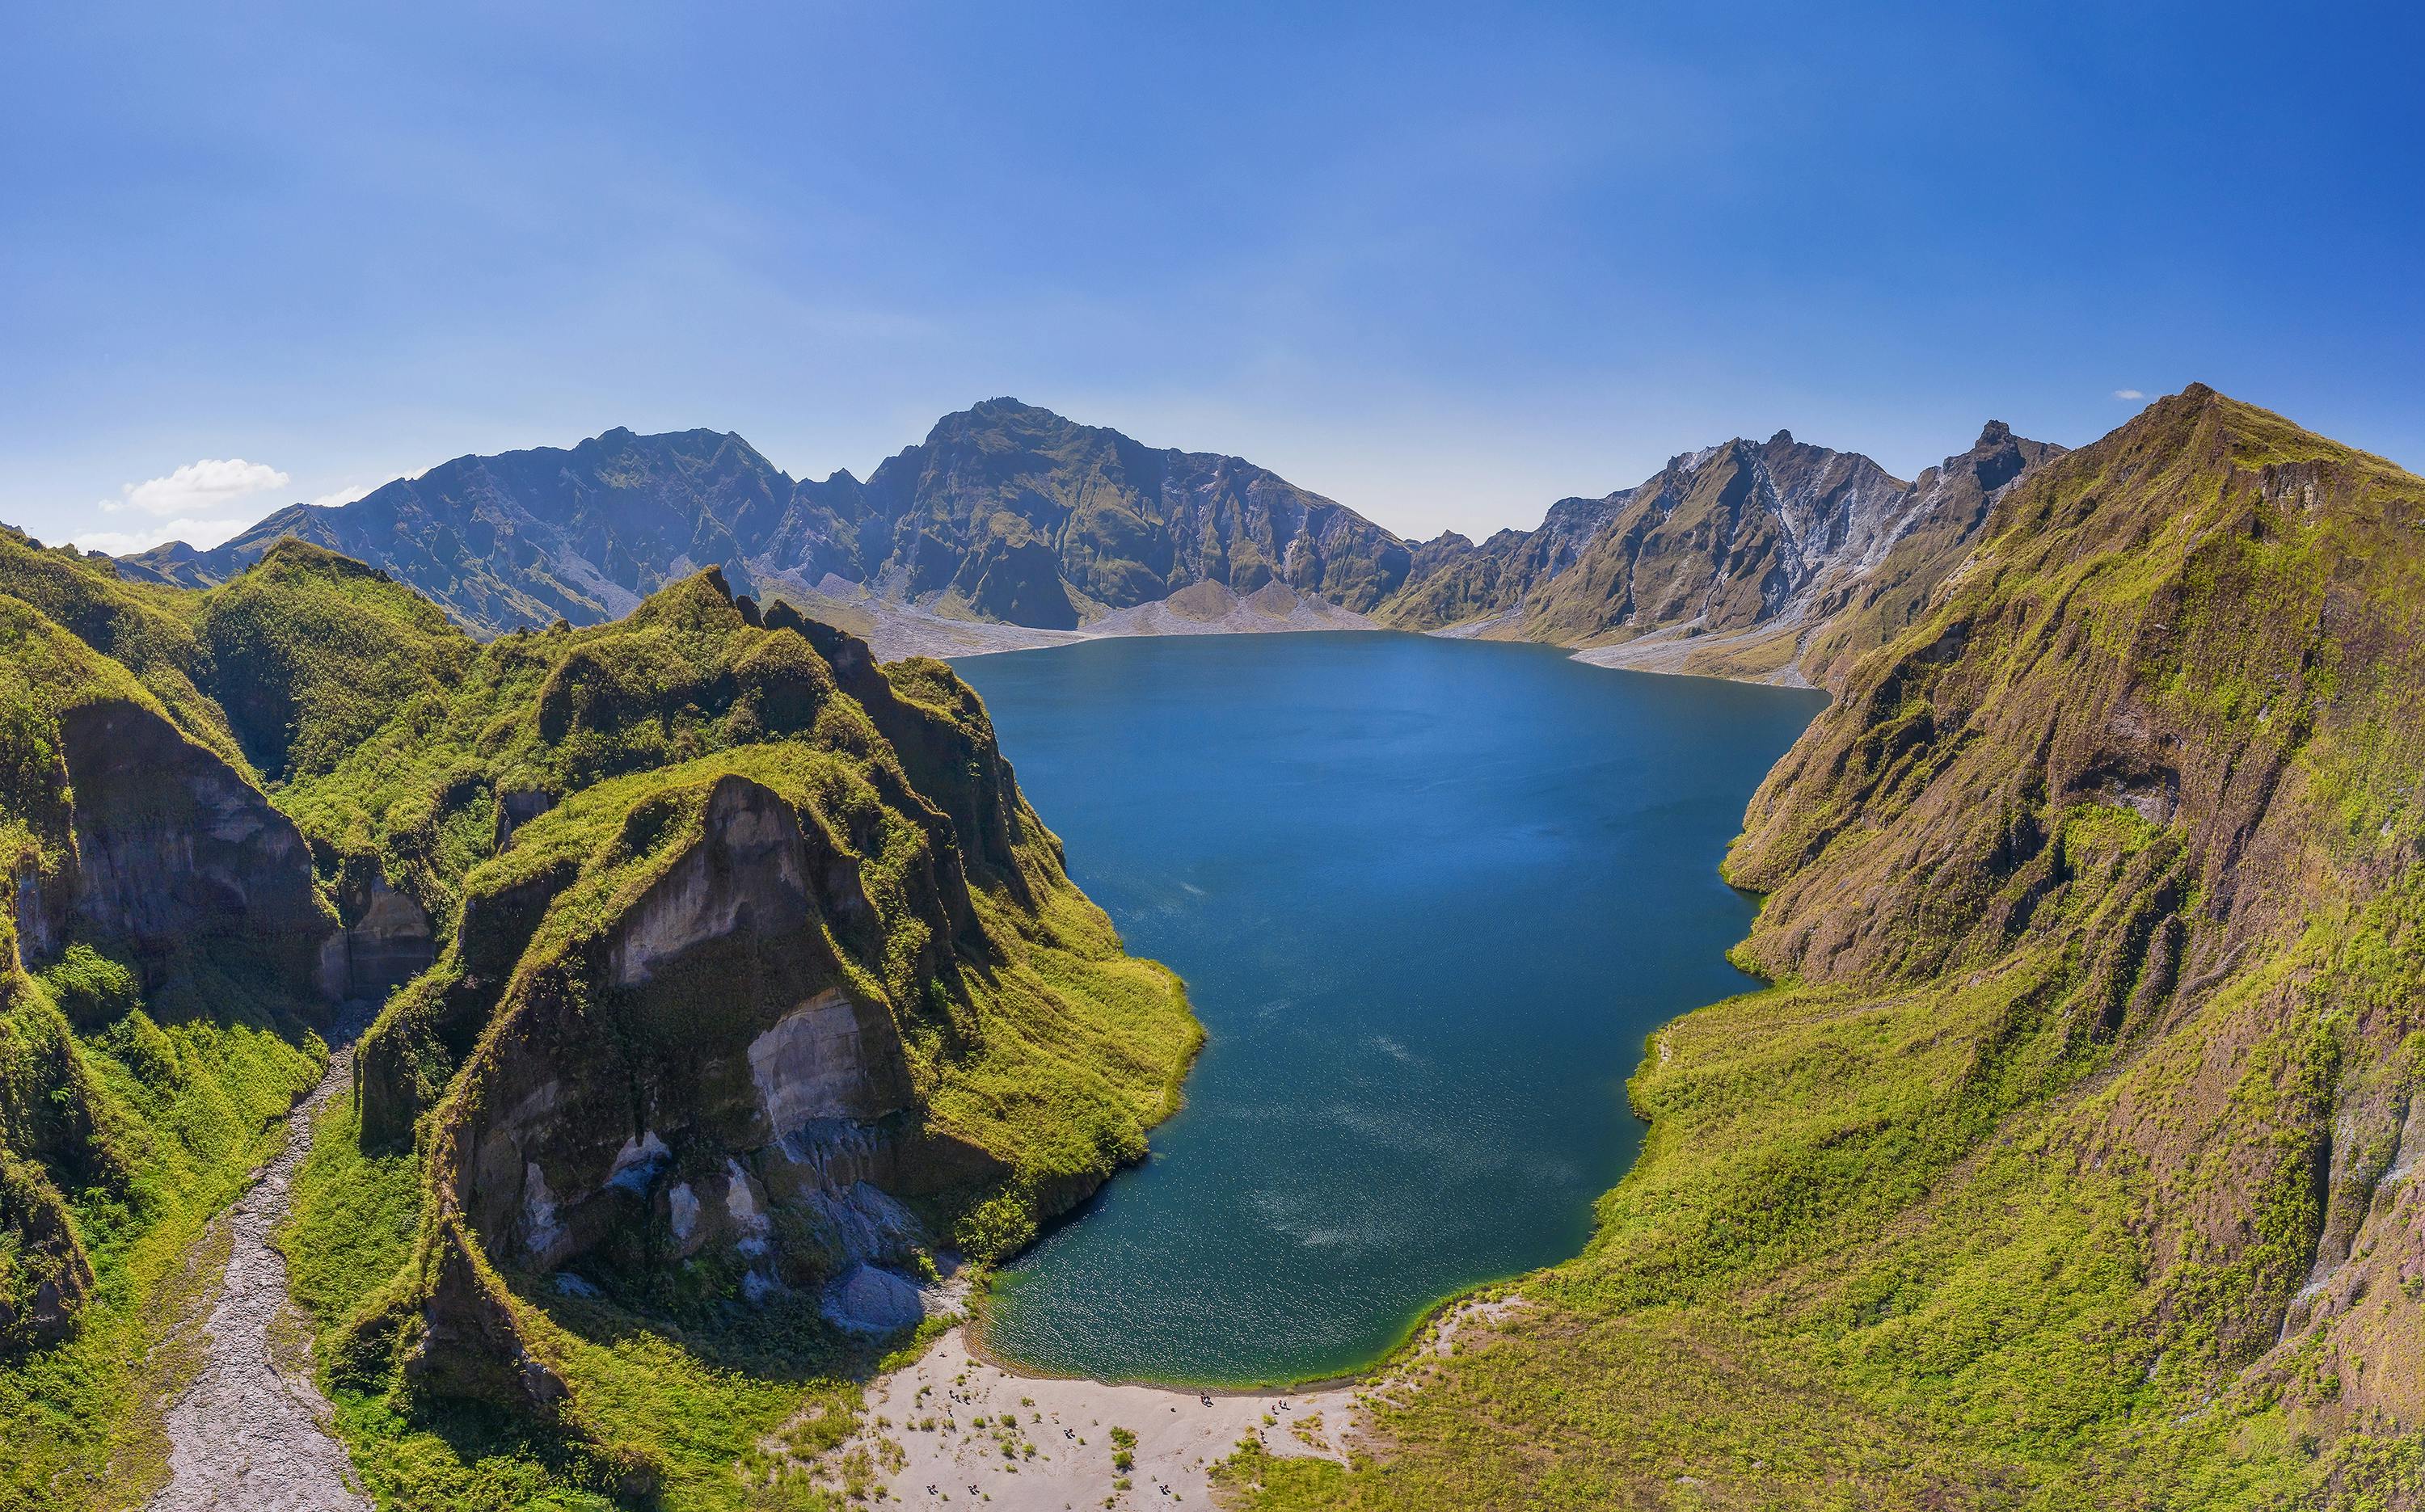 Enjoy the natural beauty of Mount Pinatubo